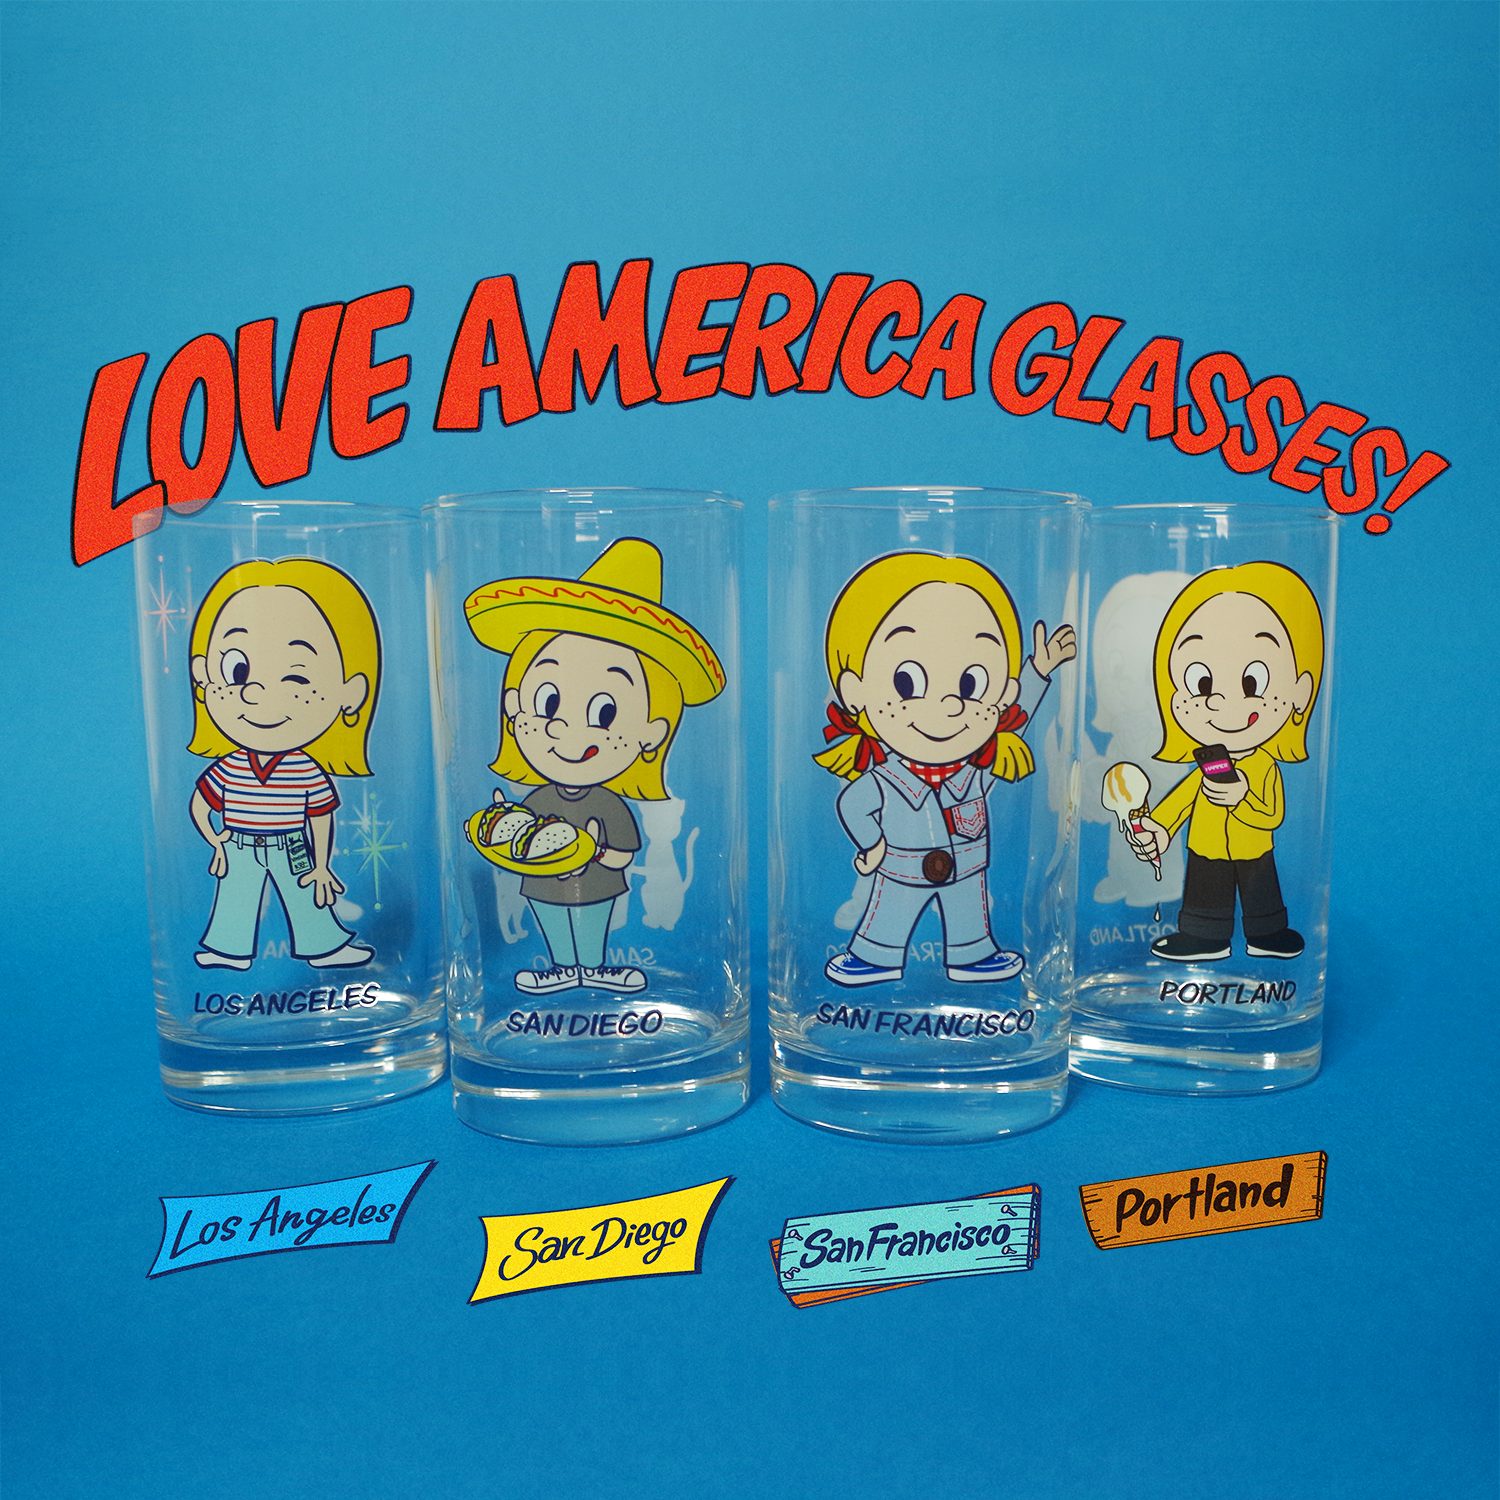 LOVE AMERICA GLASSES!